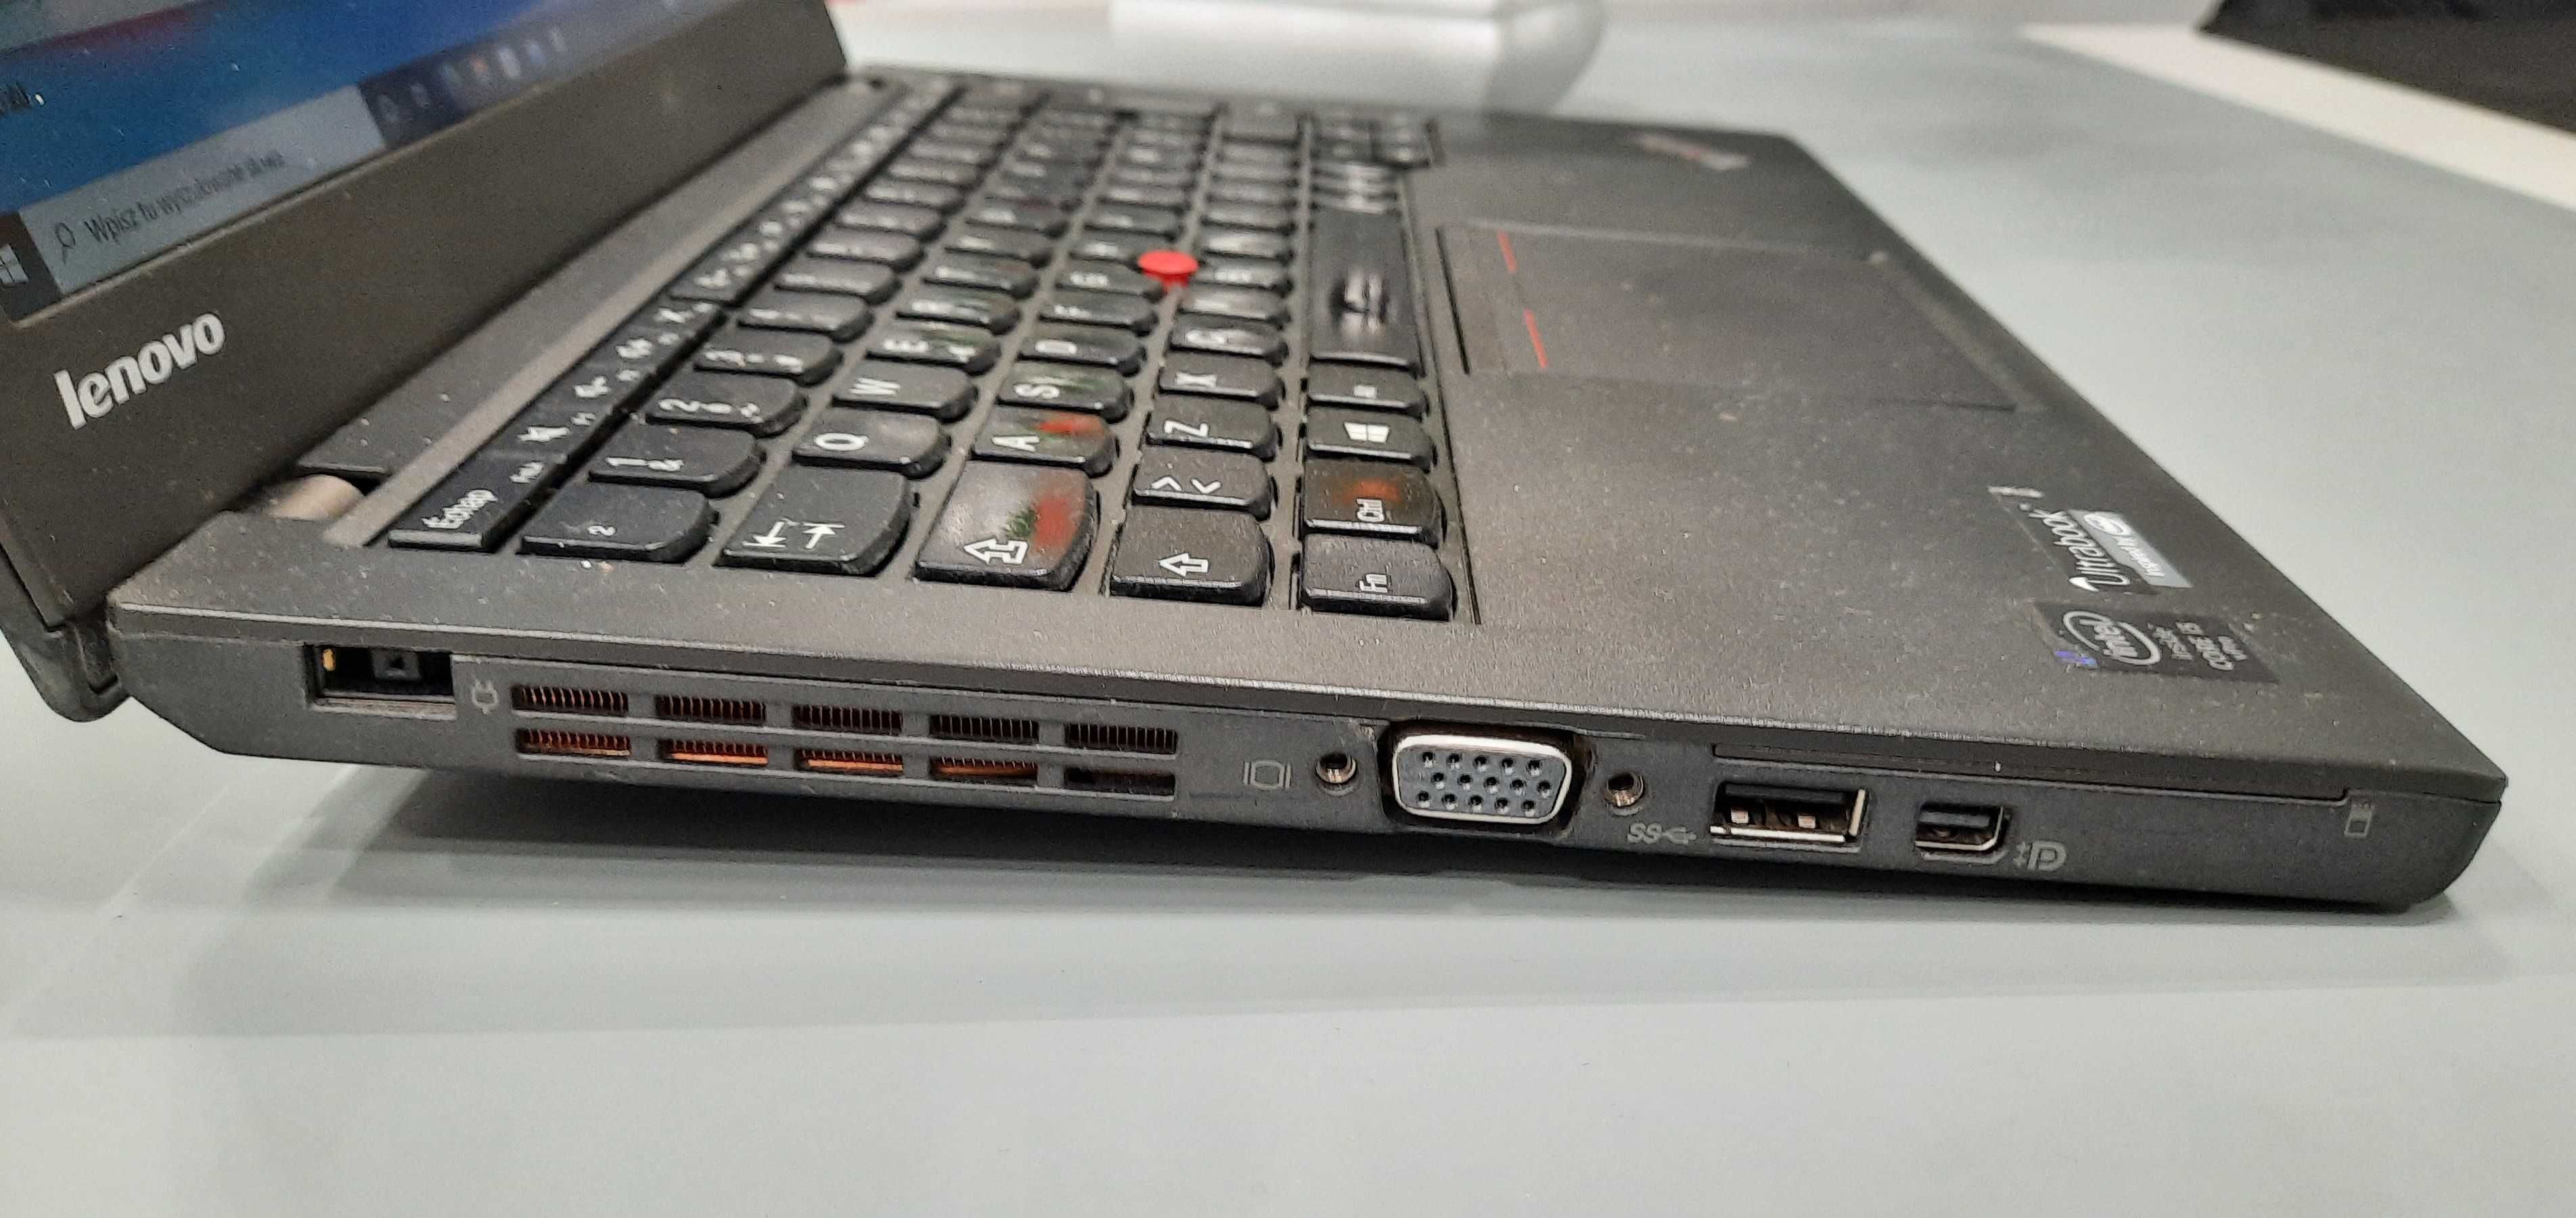 Laptop Lenovo Thinkpad X240 i5/ 4GB RAM/ 120SSD /WIN10